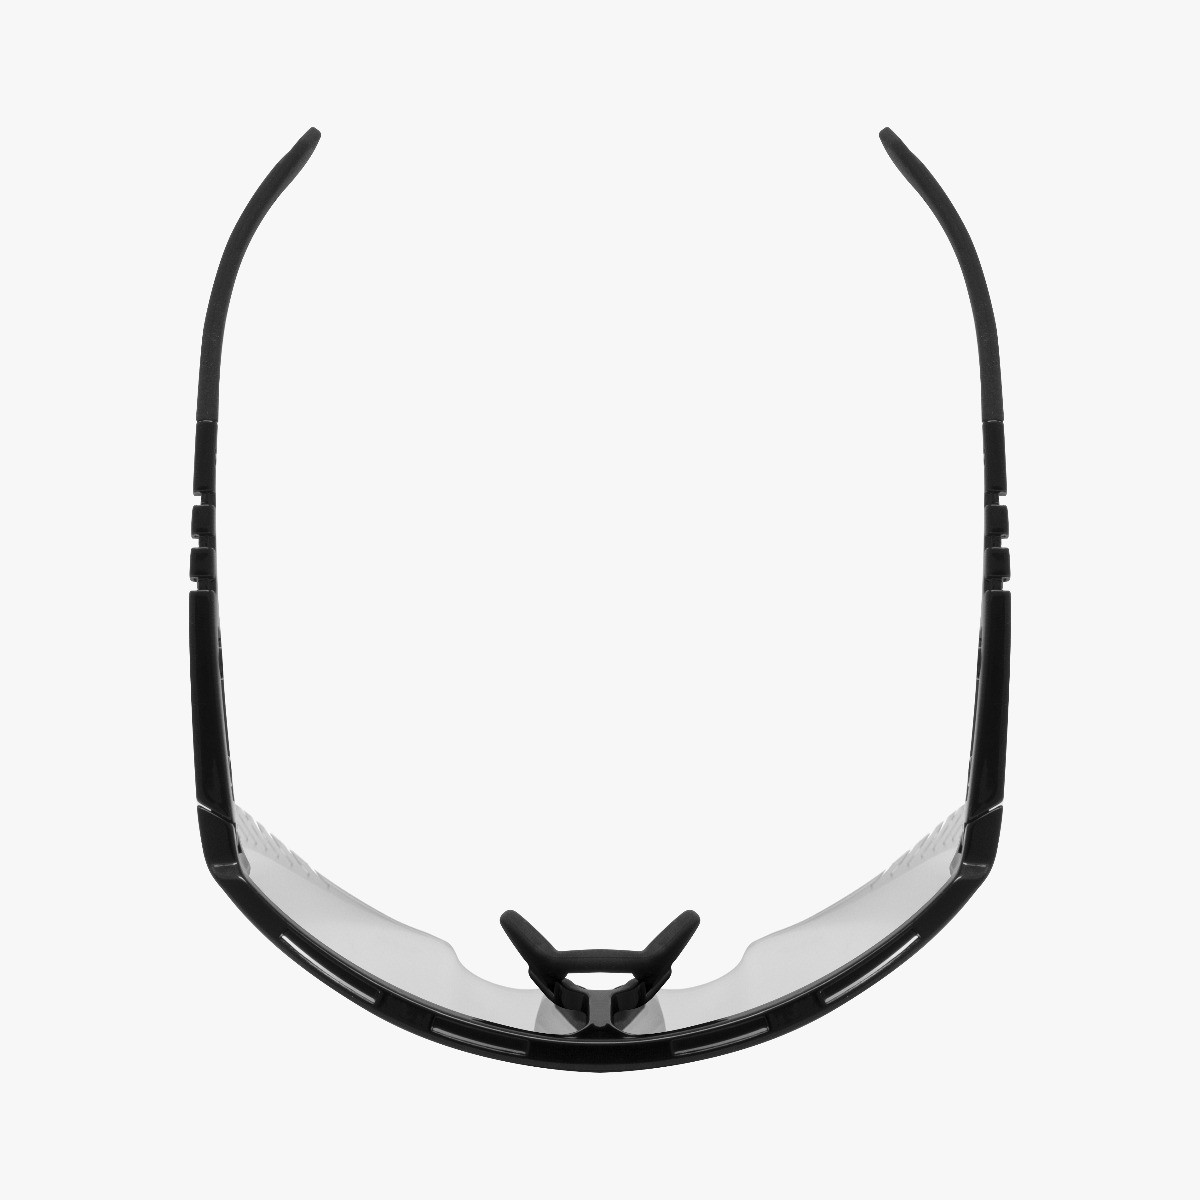 Scicon Sports | Aerowing Lamon Sport Performance Sunglasses - Black Gloss / Photocromic Silver - EY30010200